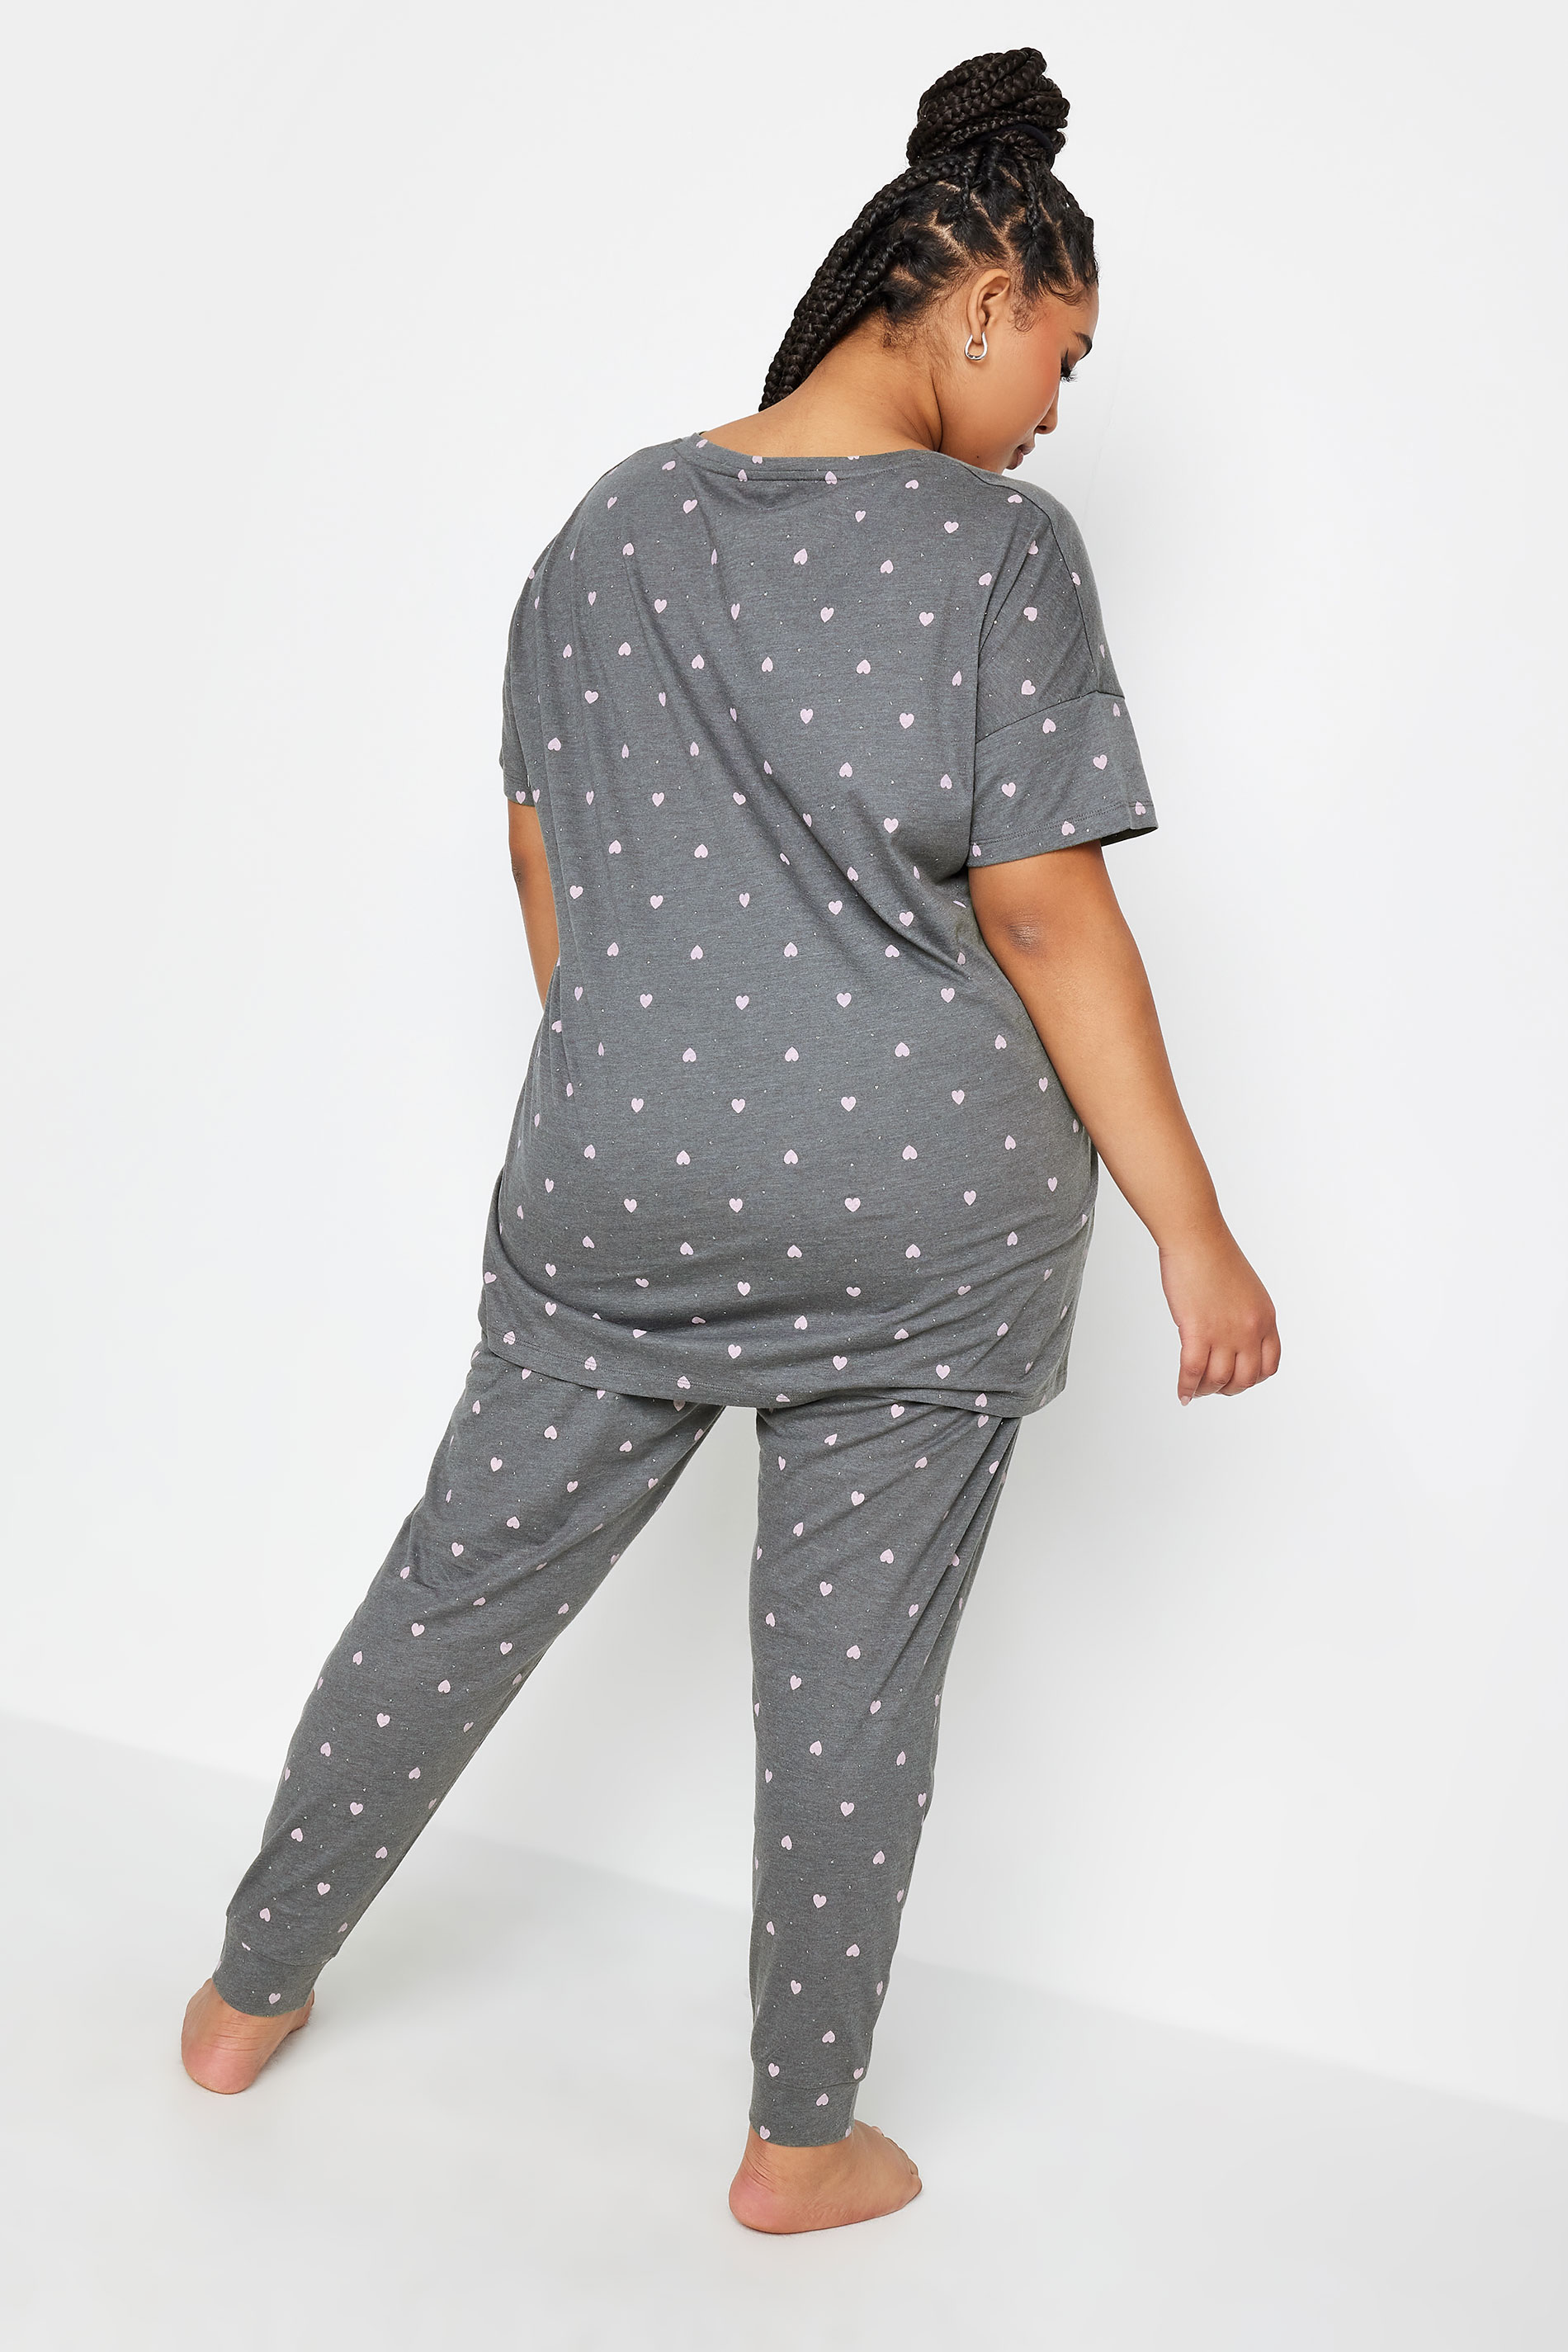 YOURS Plus Size Grey Mini Heart Print Pyjama Set | Yours Clothing 3